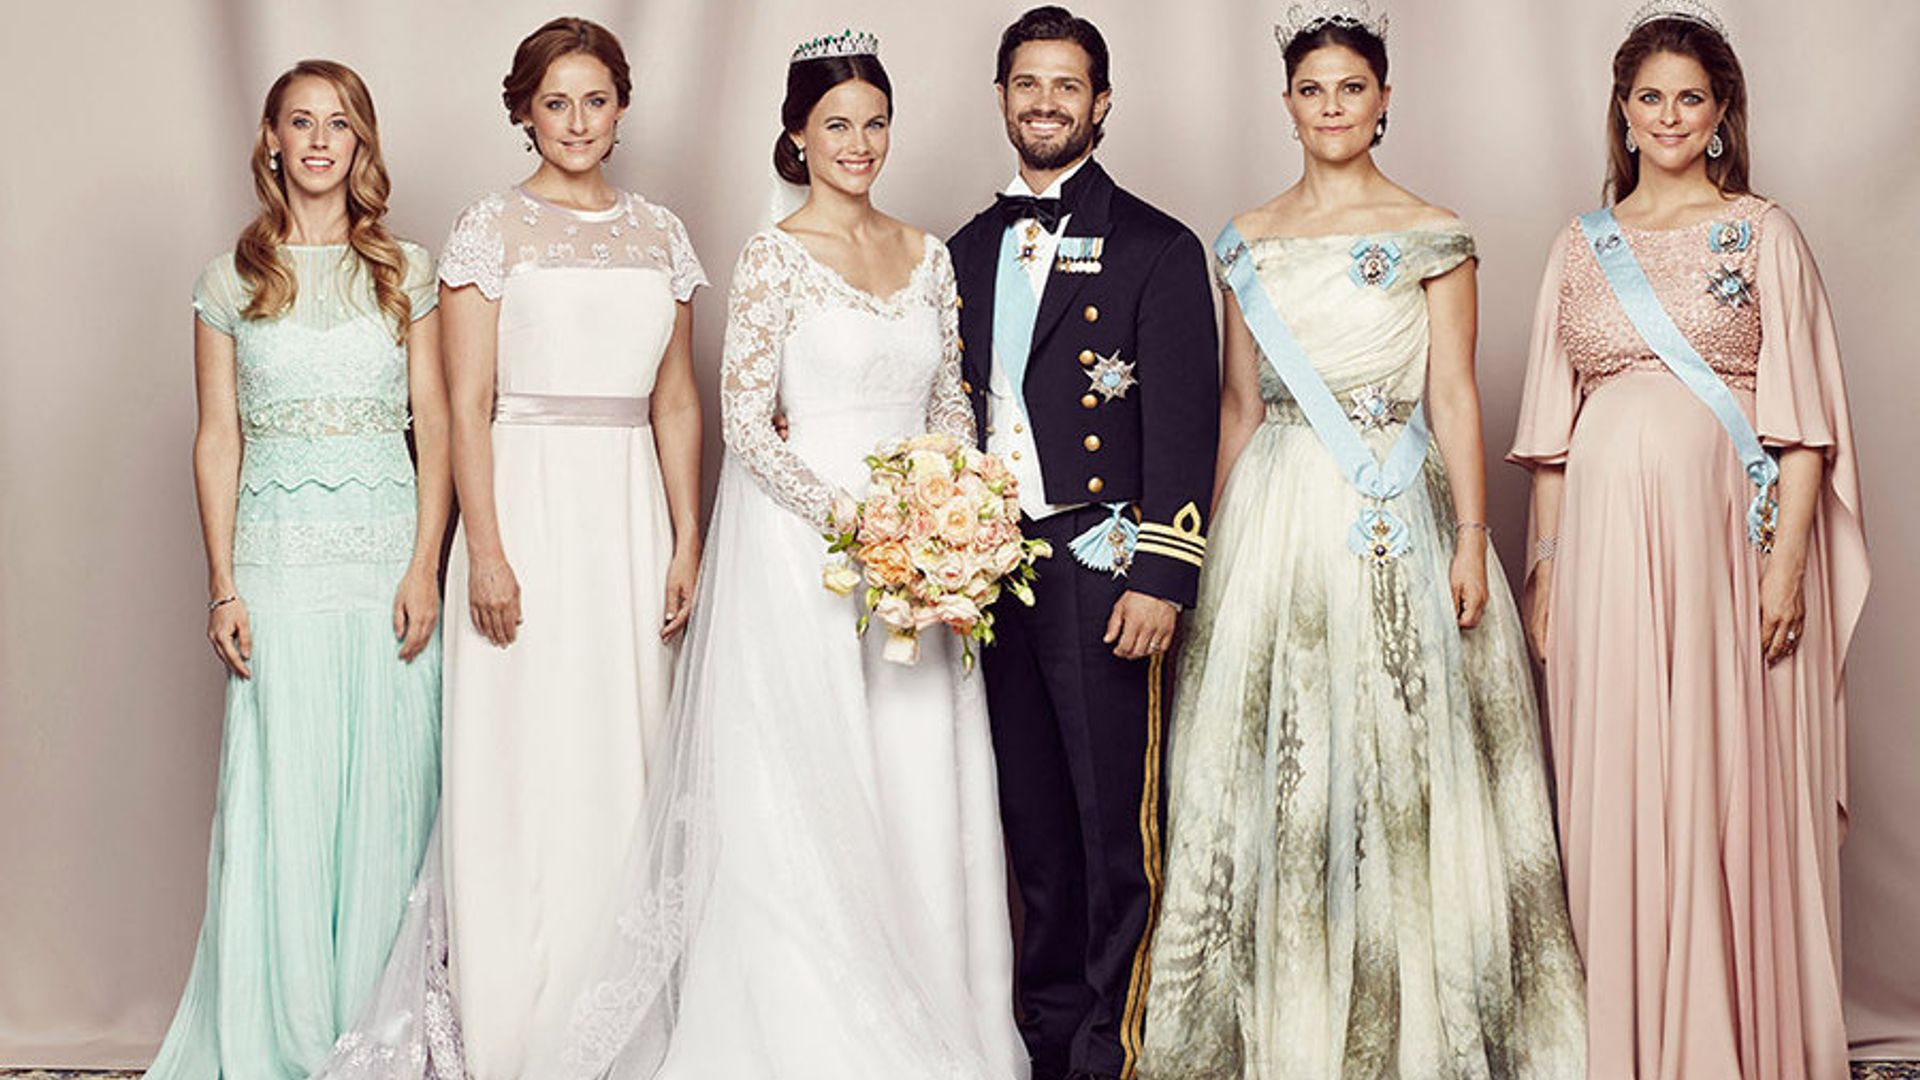 Sweden's Prince Carl Philip and Princess Sofia share official wedding photos